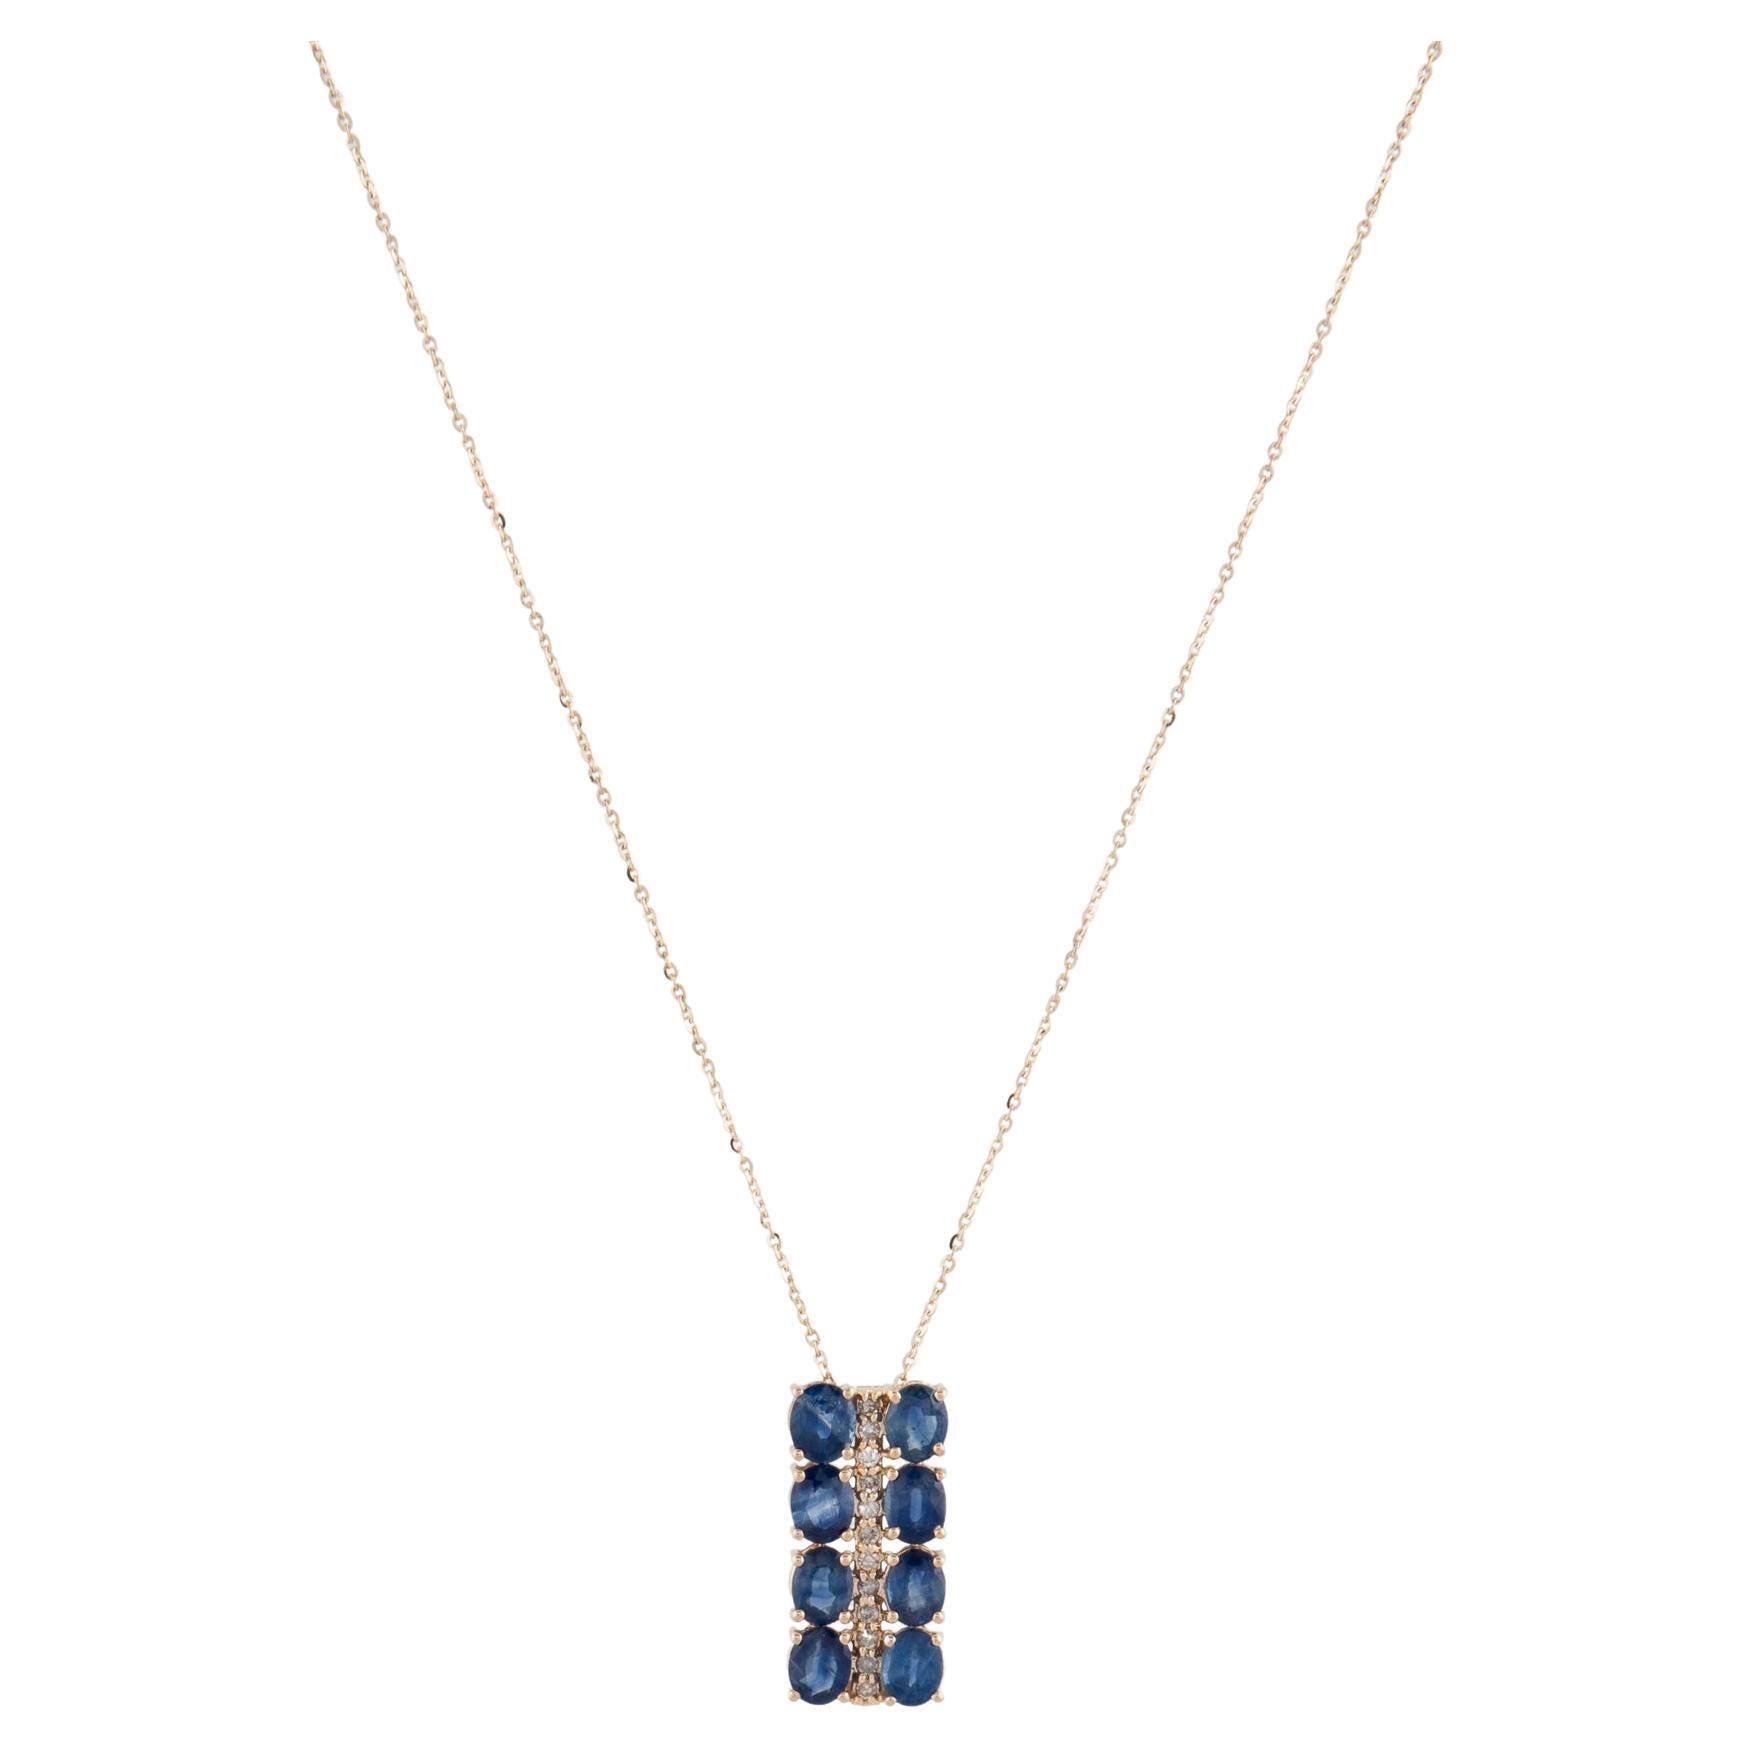 14K 3.78ctw Sapphire & Diamond Pendant Necklace: Luxury Statement Jewelry Piece